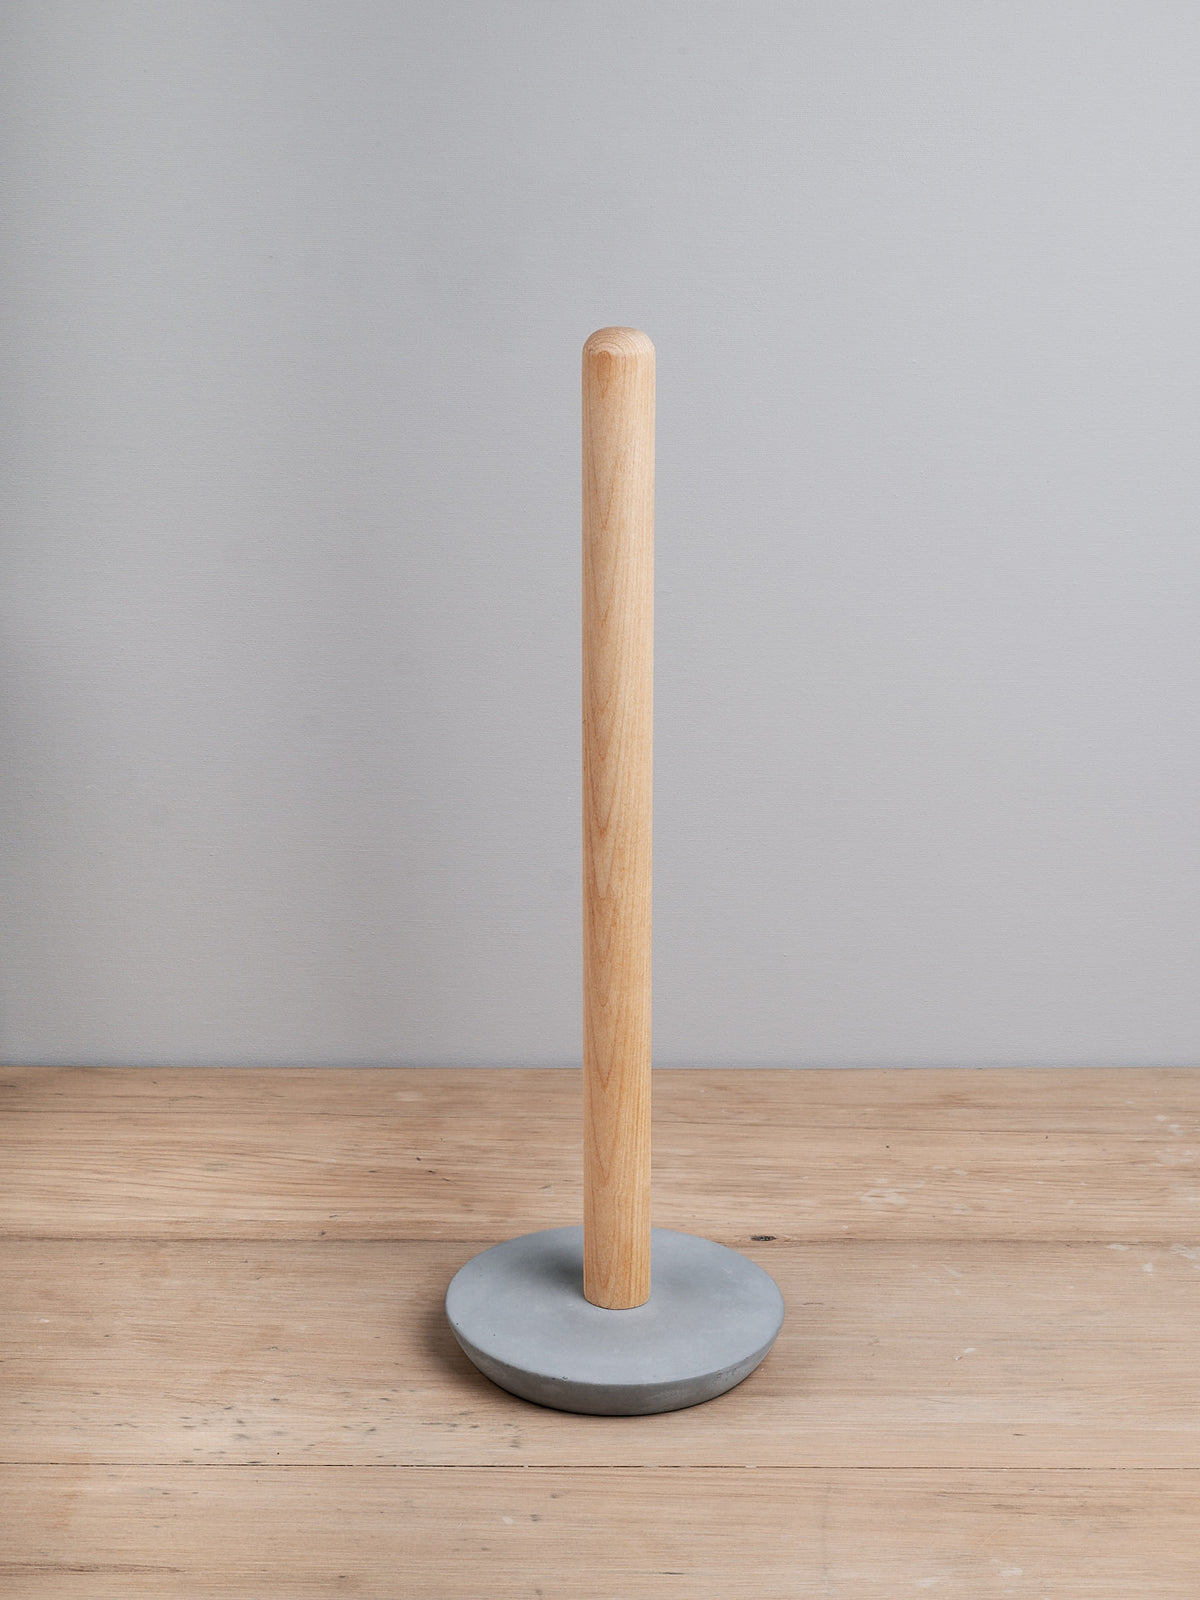 A wooden Iris Hantverk Toilet Brush + Toilet Roll Holder Set standing upright on a gray base against a neutral background.